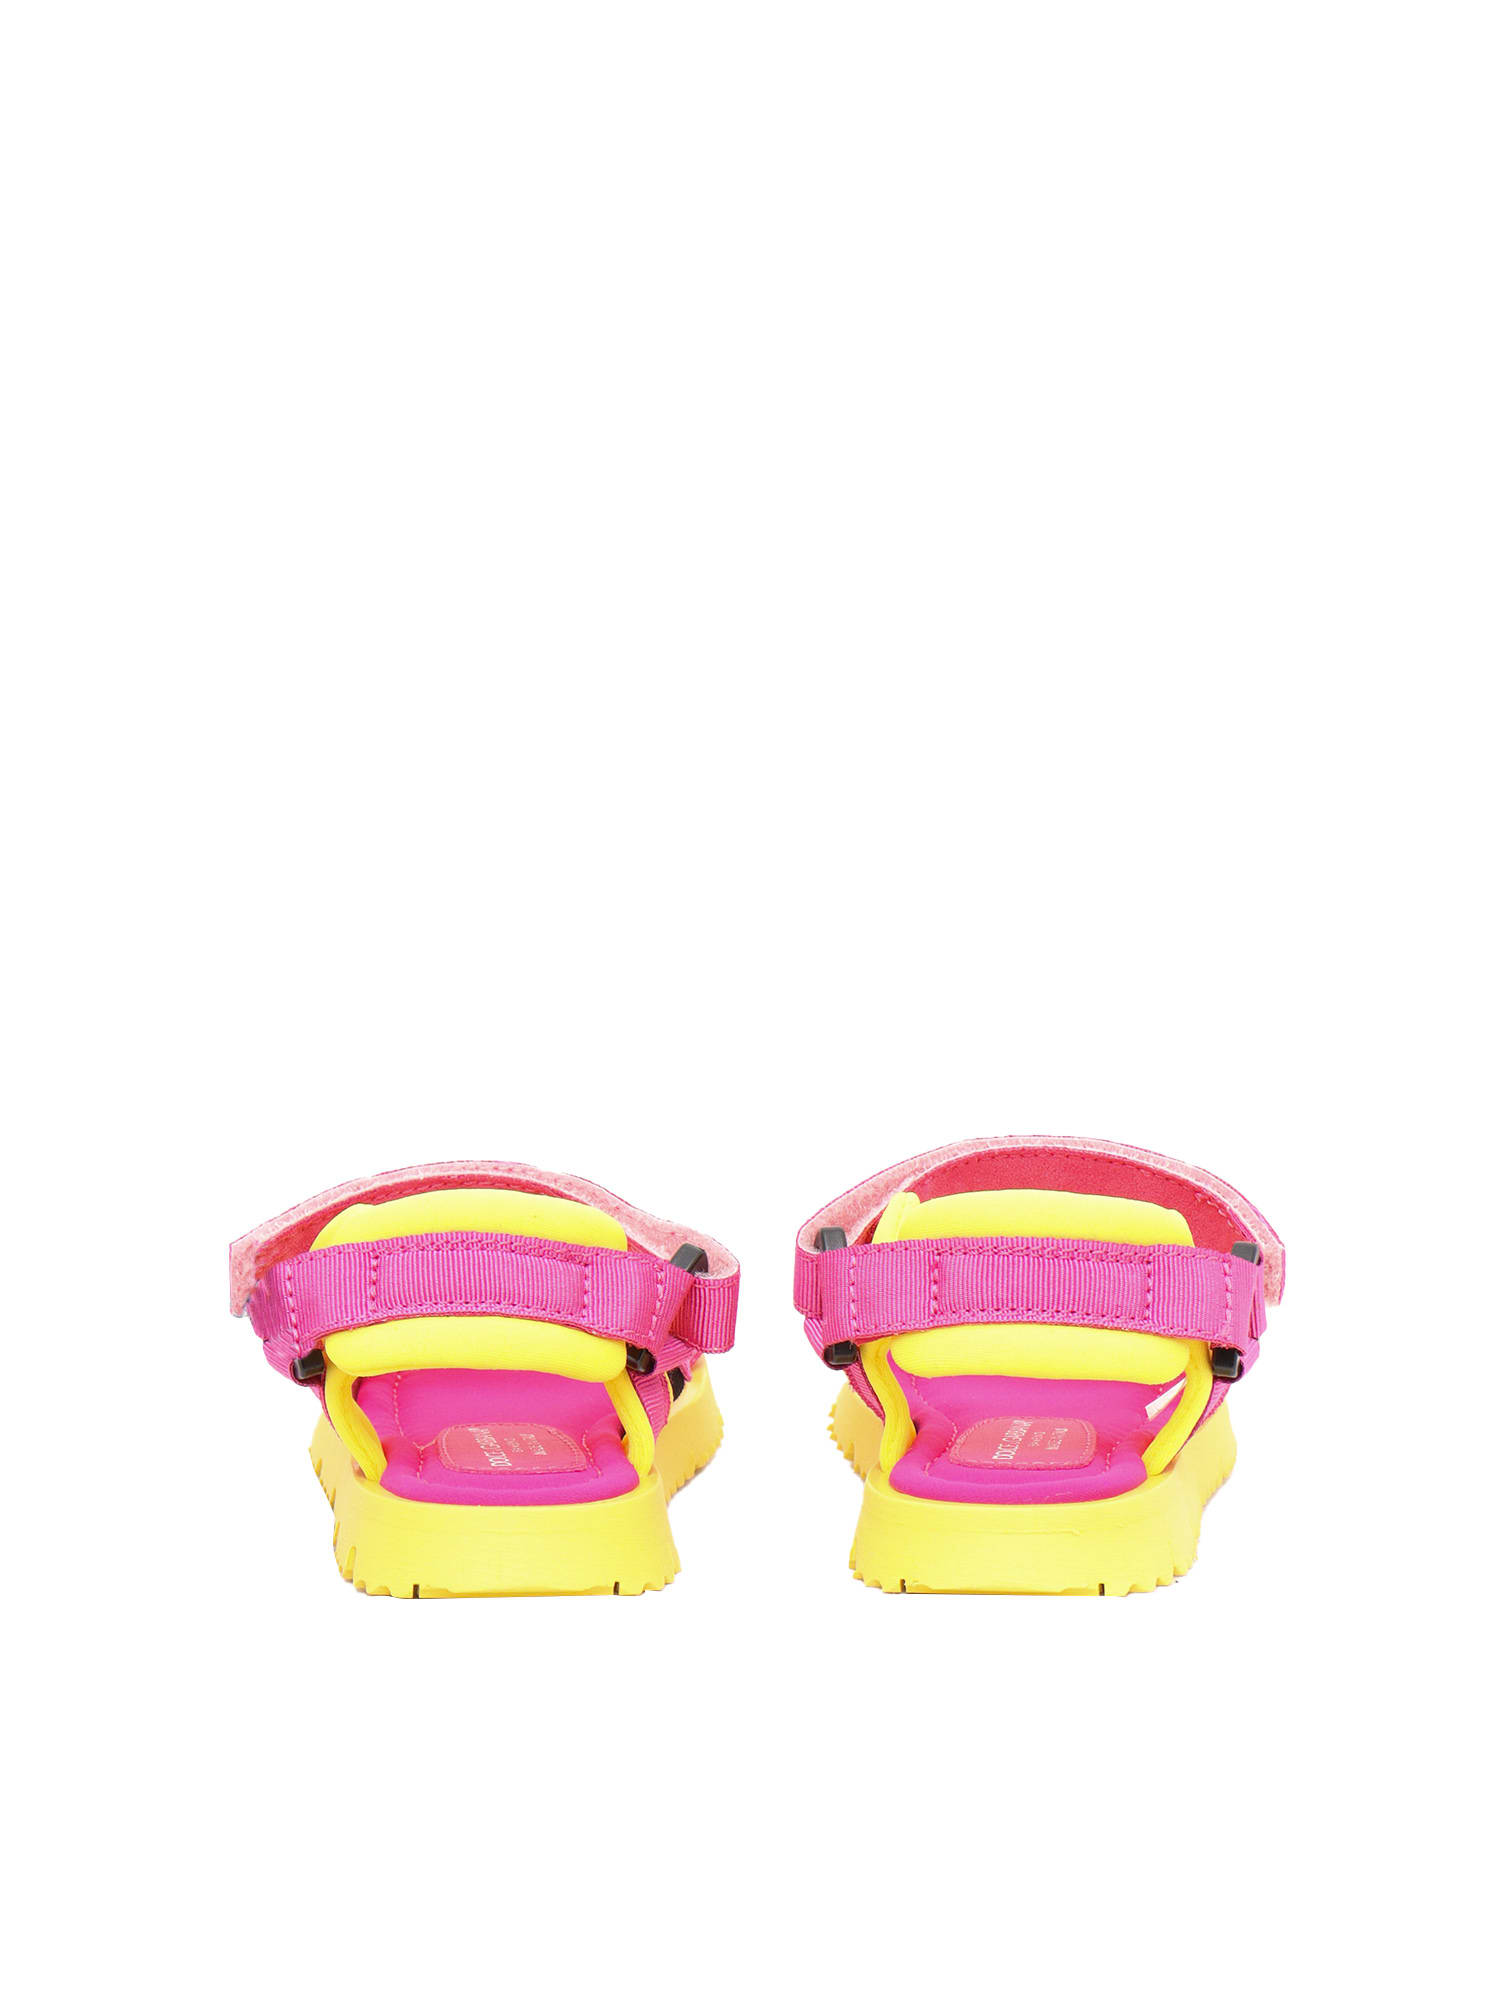 Shop Dolce & Gabbana Pink And Yellow D&g Sandals